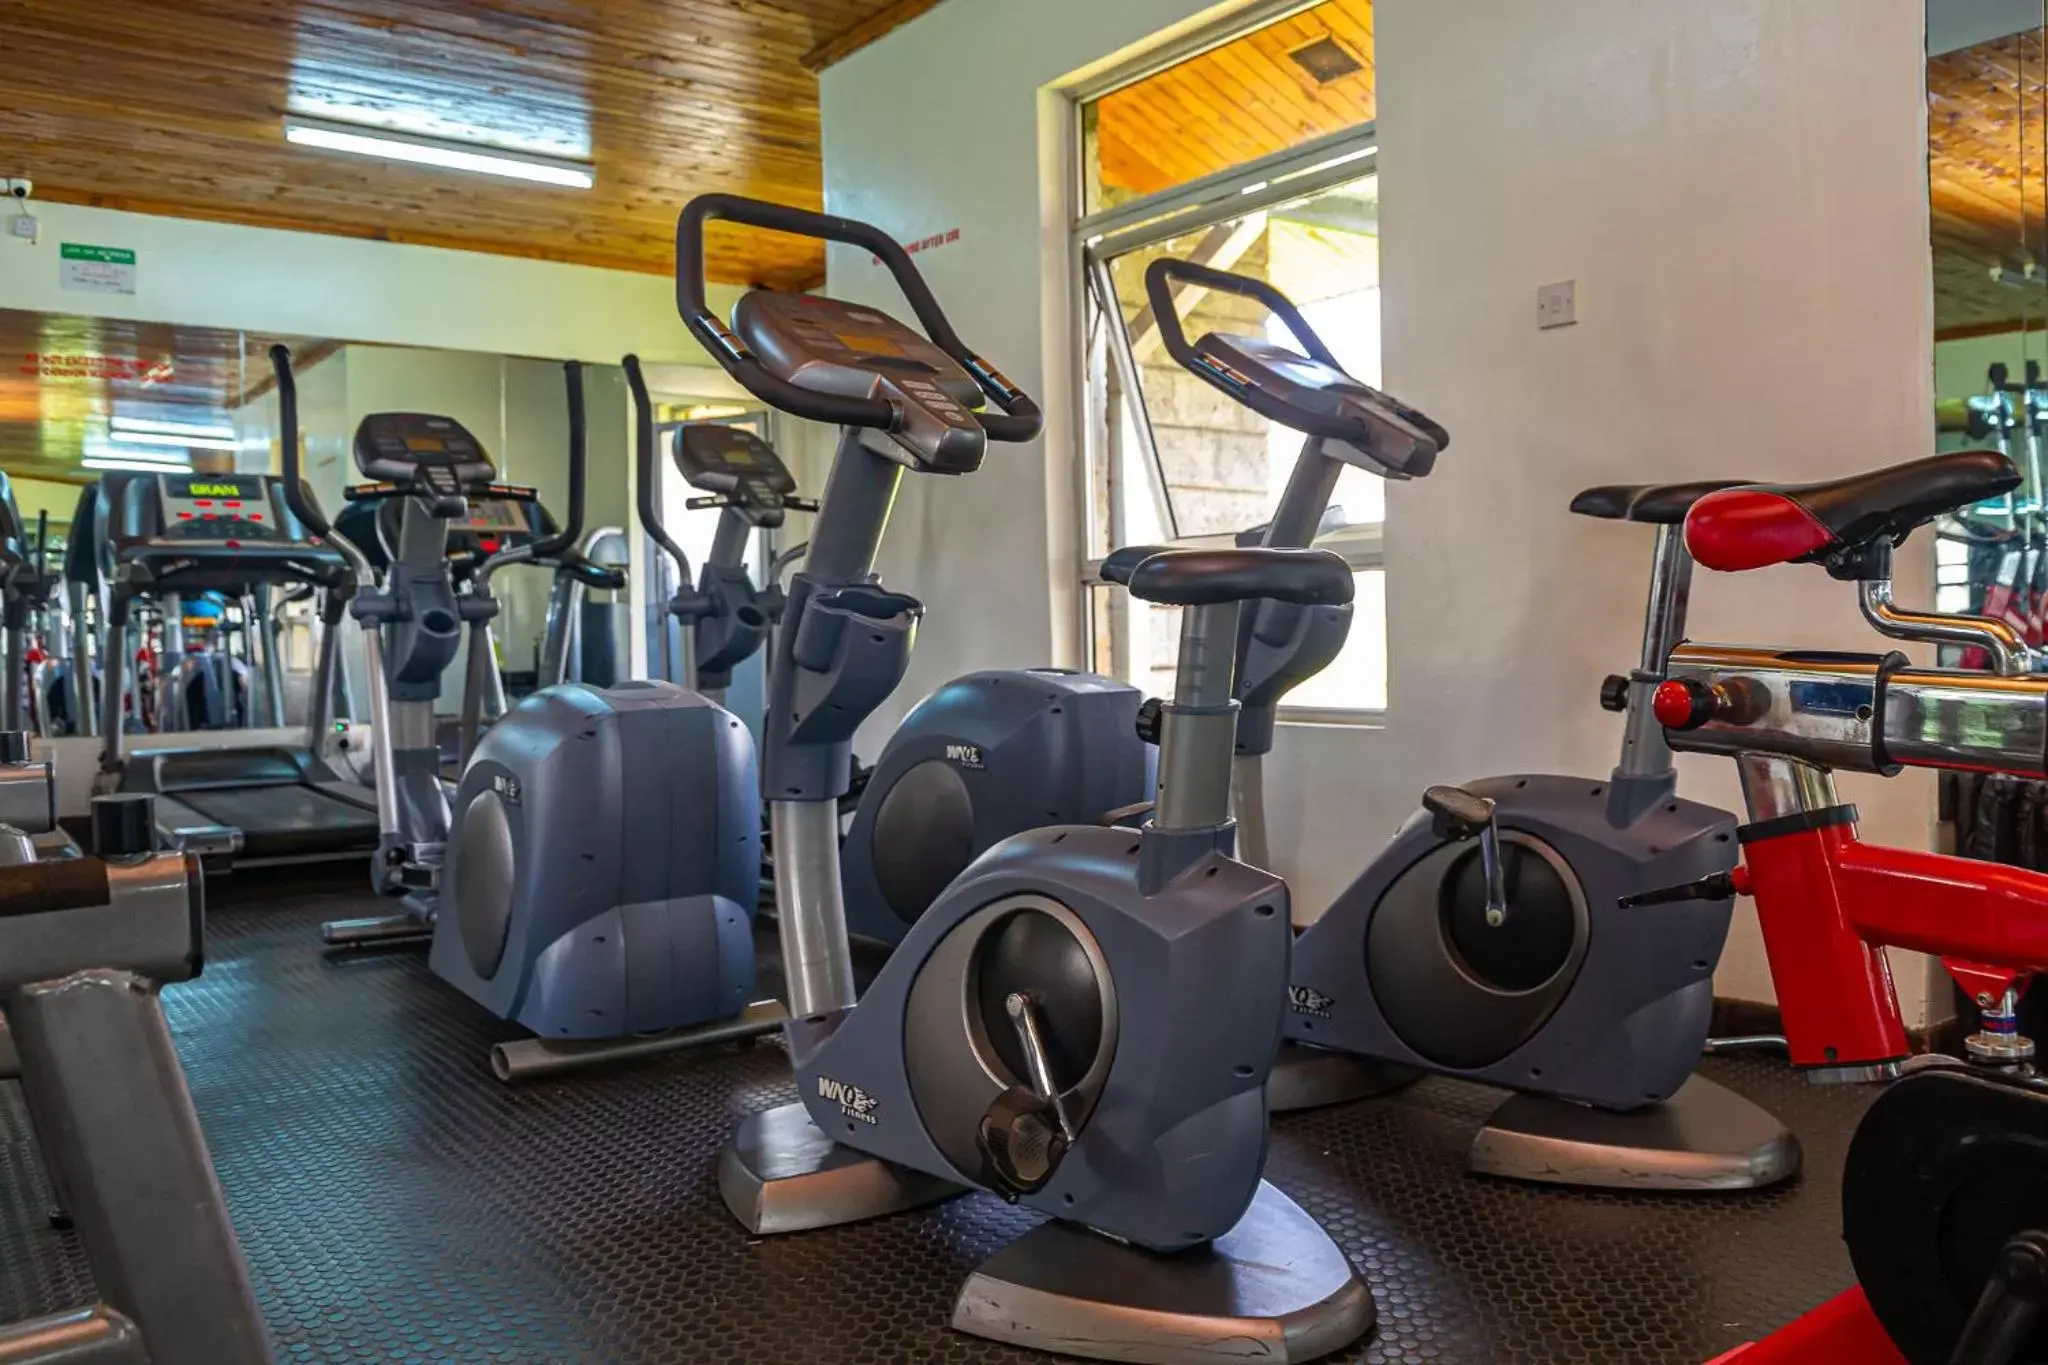 Fitness centre/facilities, Fitness Center/Facilities in Desmond Tutu Conference Centre